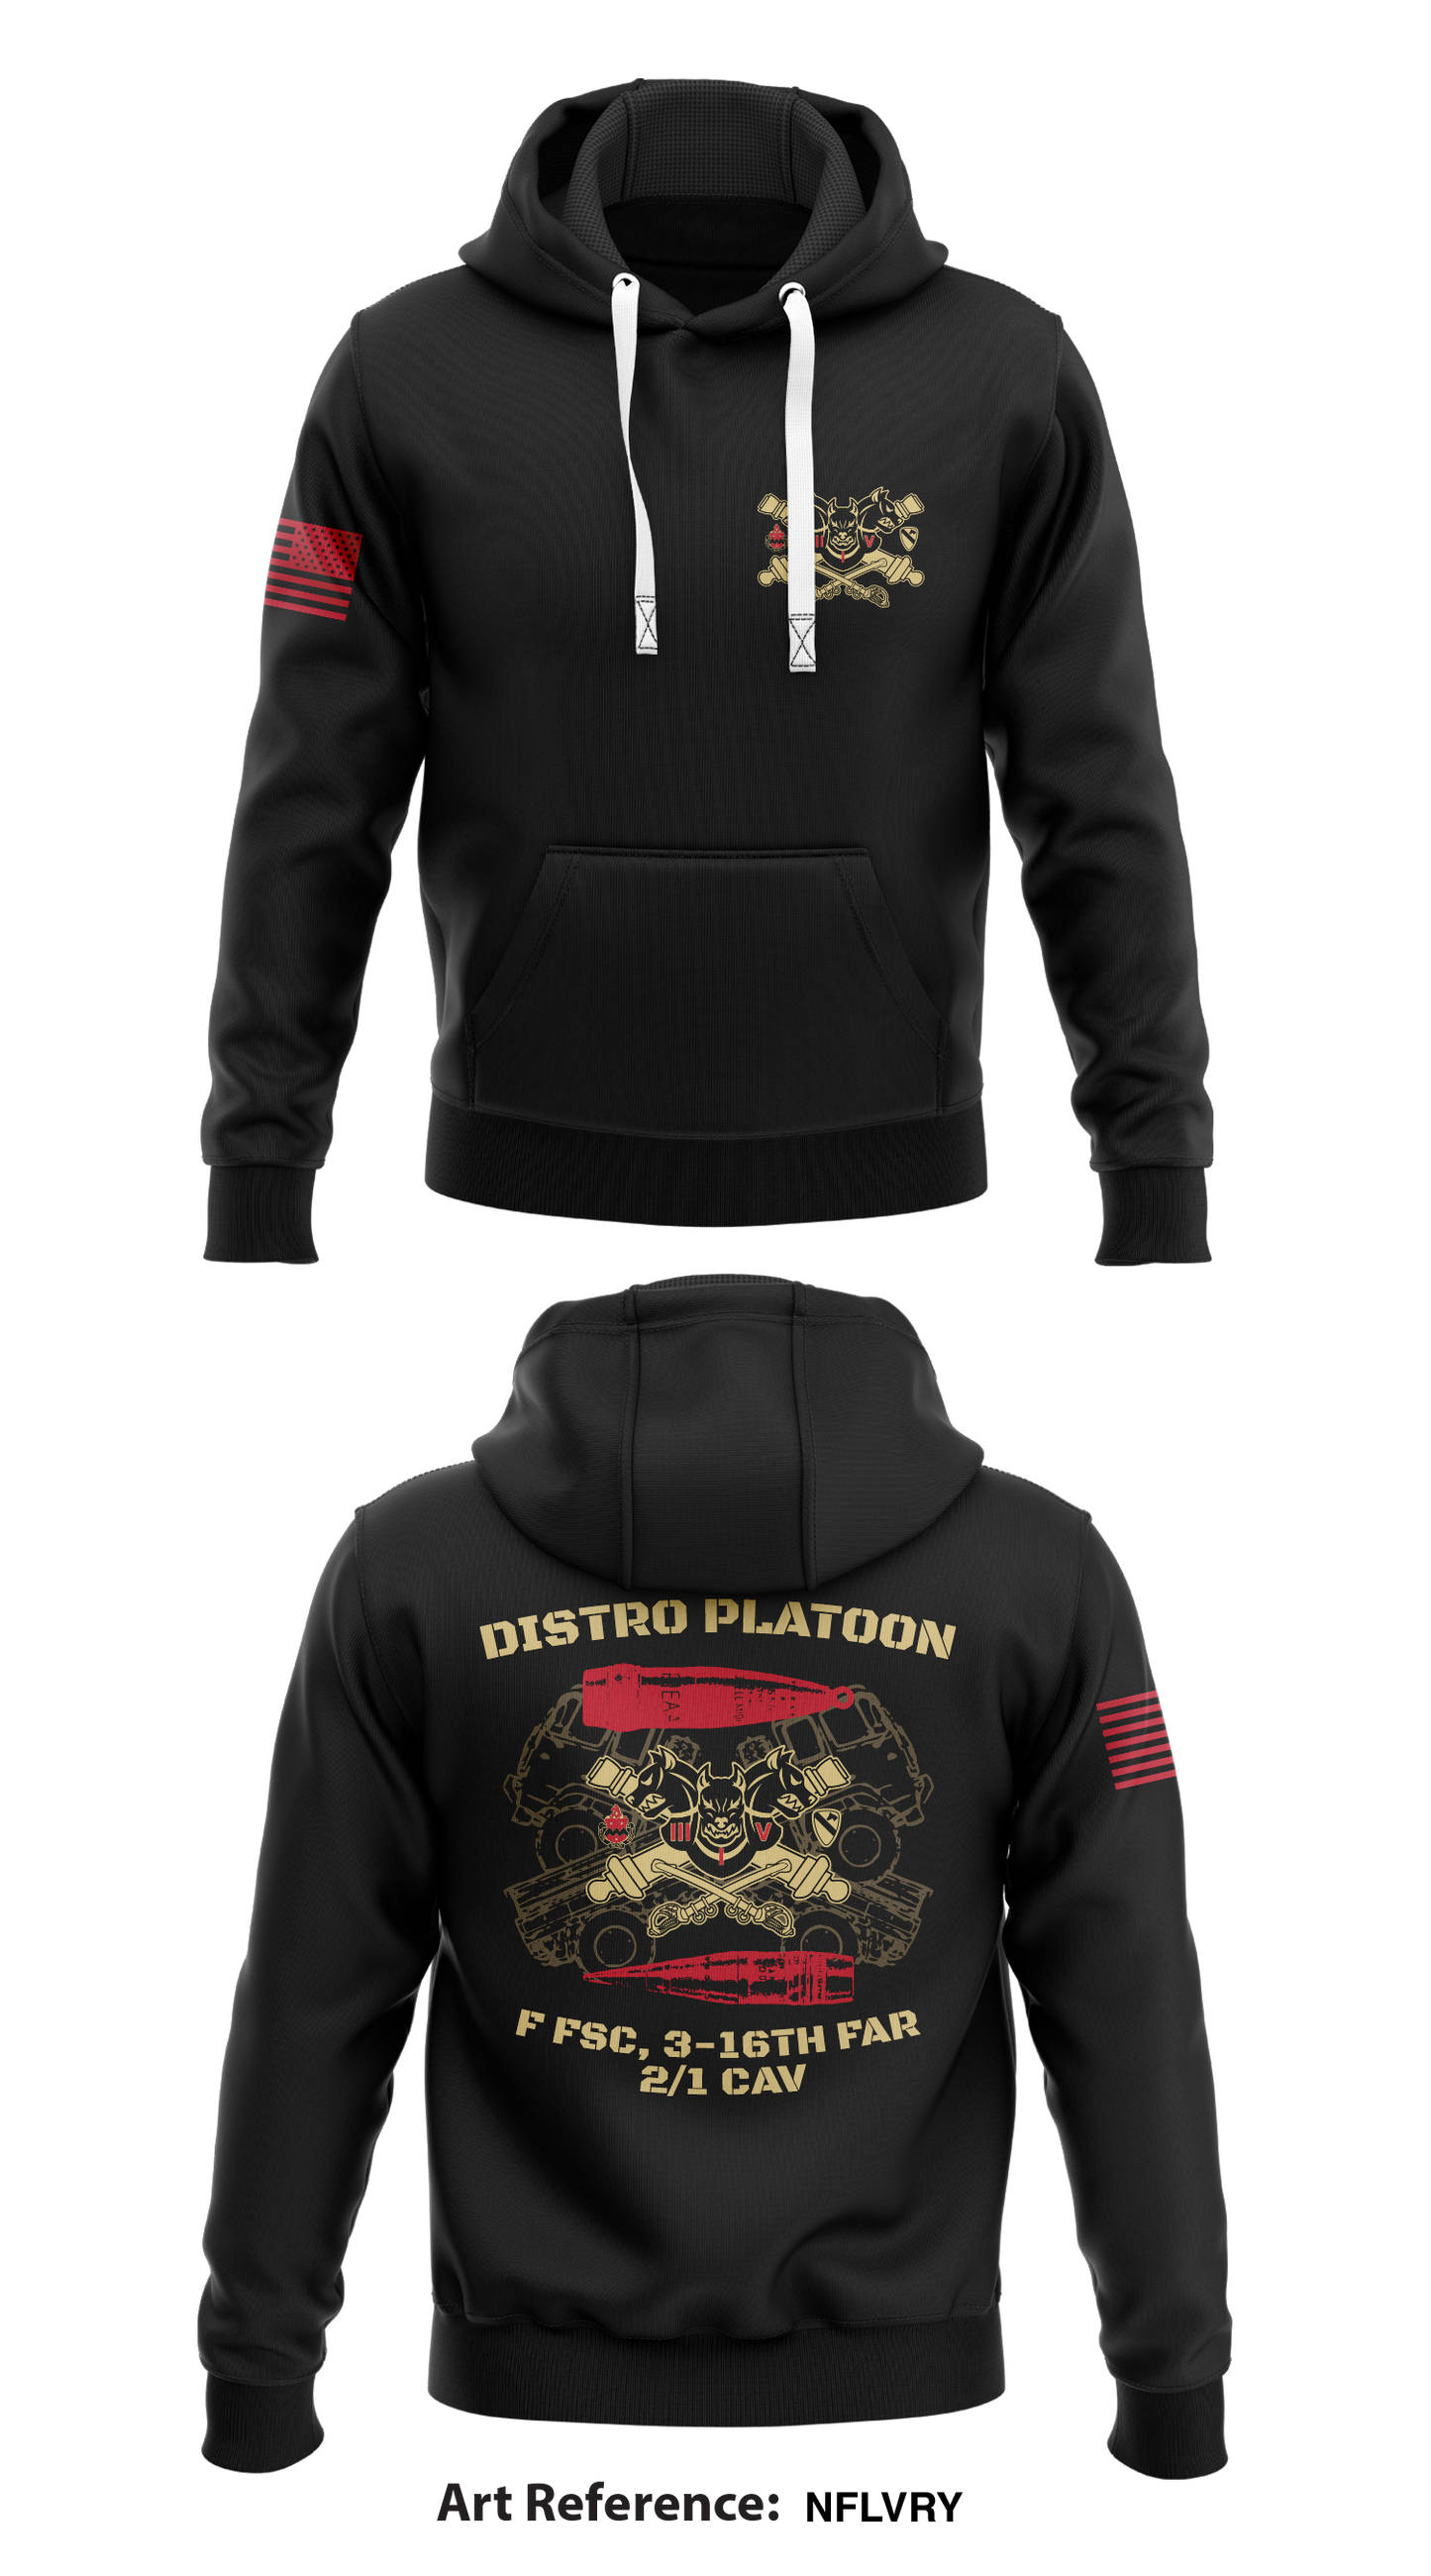 Distro Platoon, F FSC, 3-16th FAR, 2/1 CAV Store 1  Core Men's Hooded Performance Sweatshirt - nFLvRY